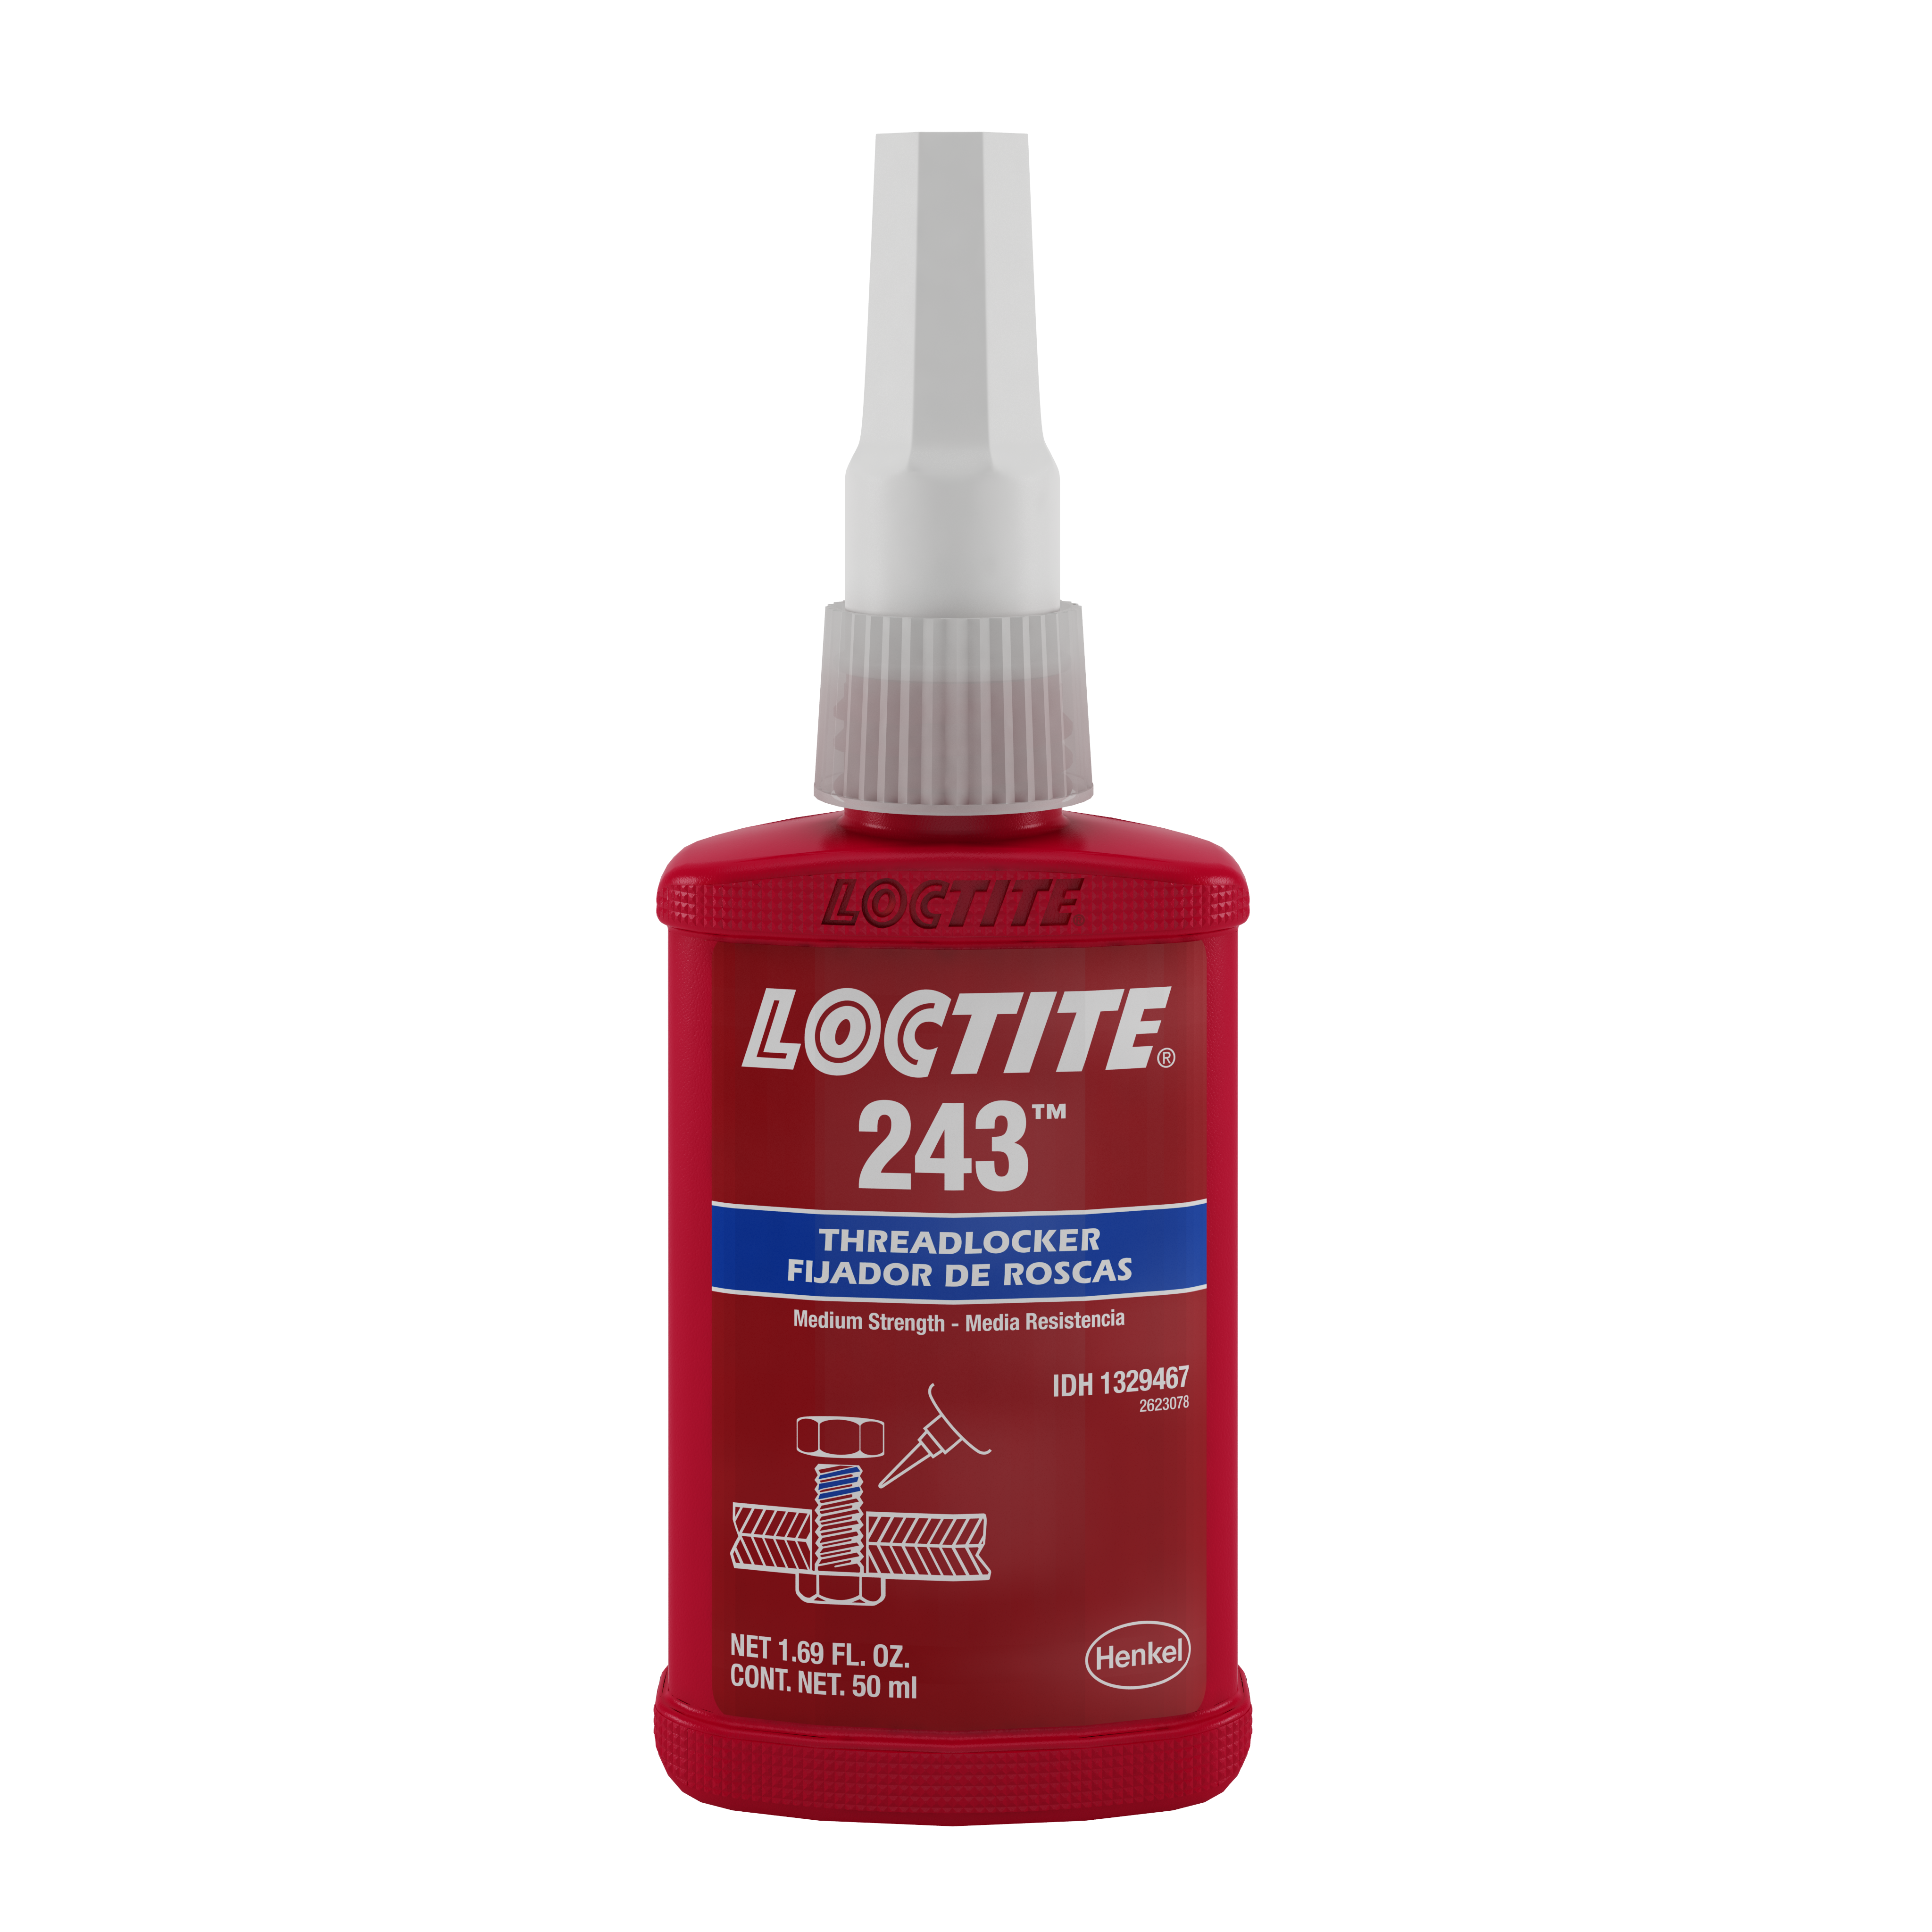 Loctite 243 x 10ml Medium Strength Threadlocking Adhesive